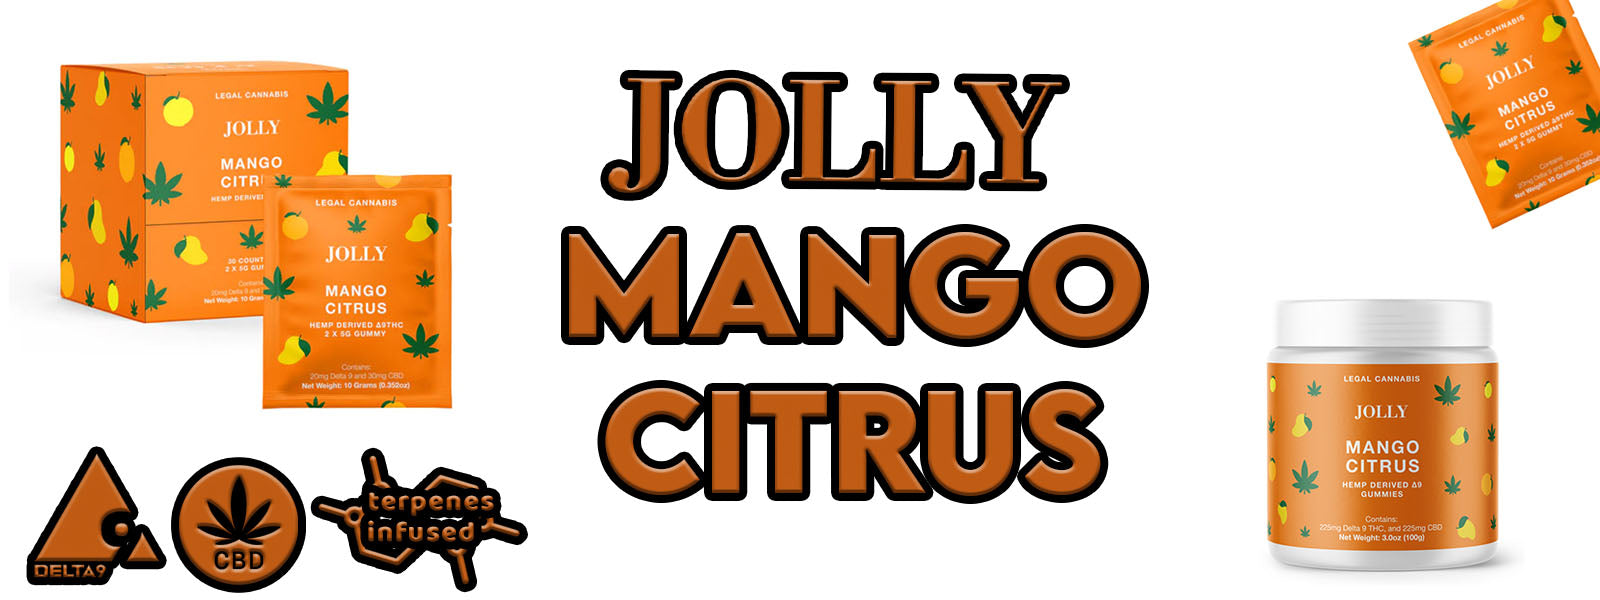 Jolly Mango Citrus